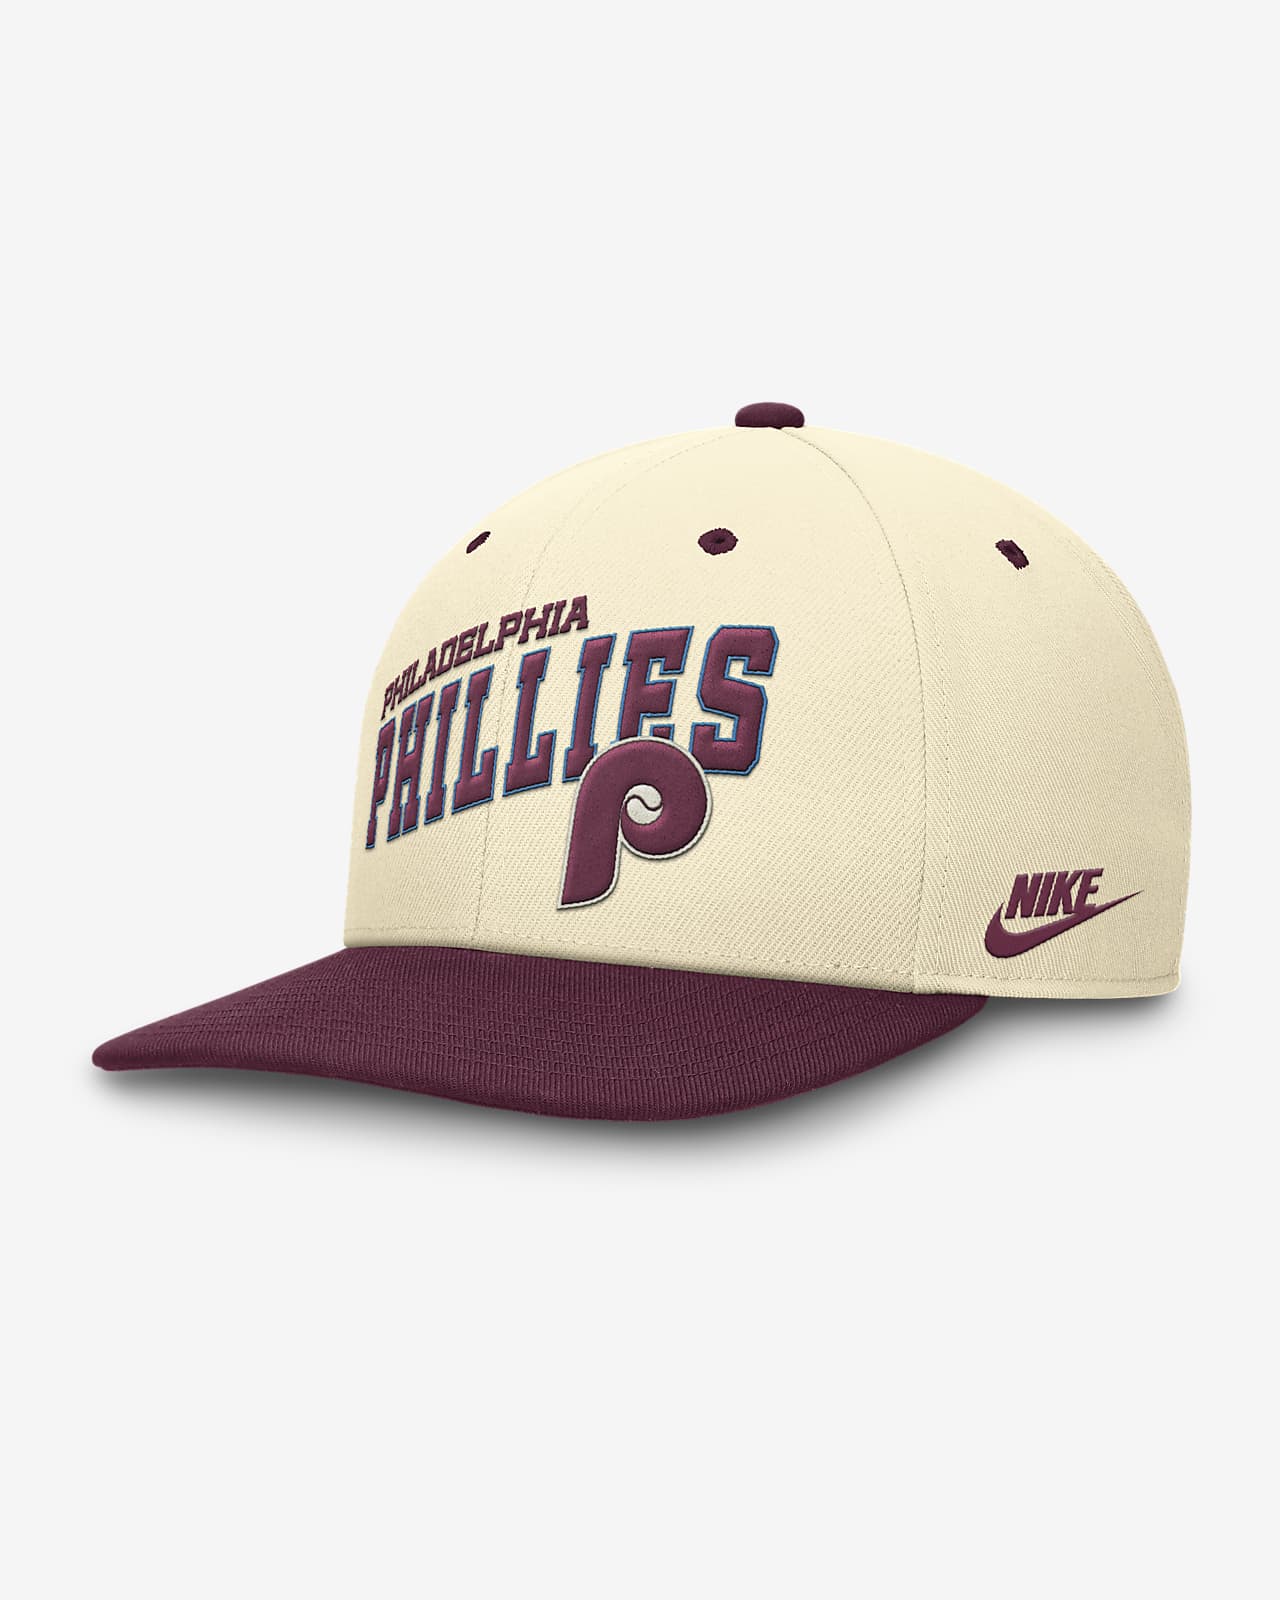 Philadelphia Phillies Rewind Cooperstown Pro Men's Nike Dri-FIT MLB Adjustable Hat